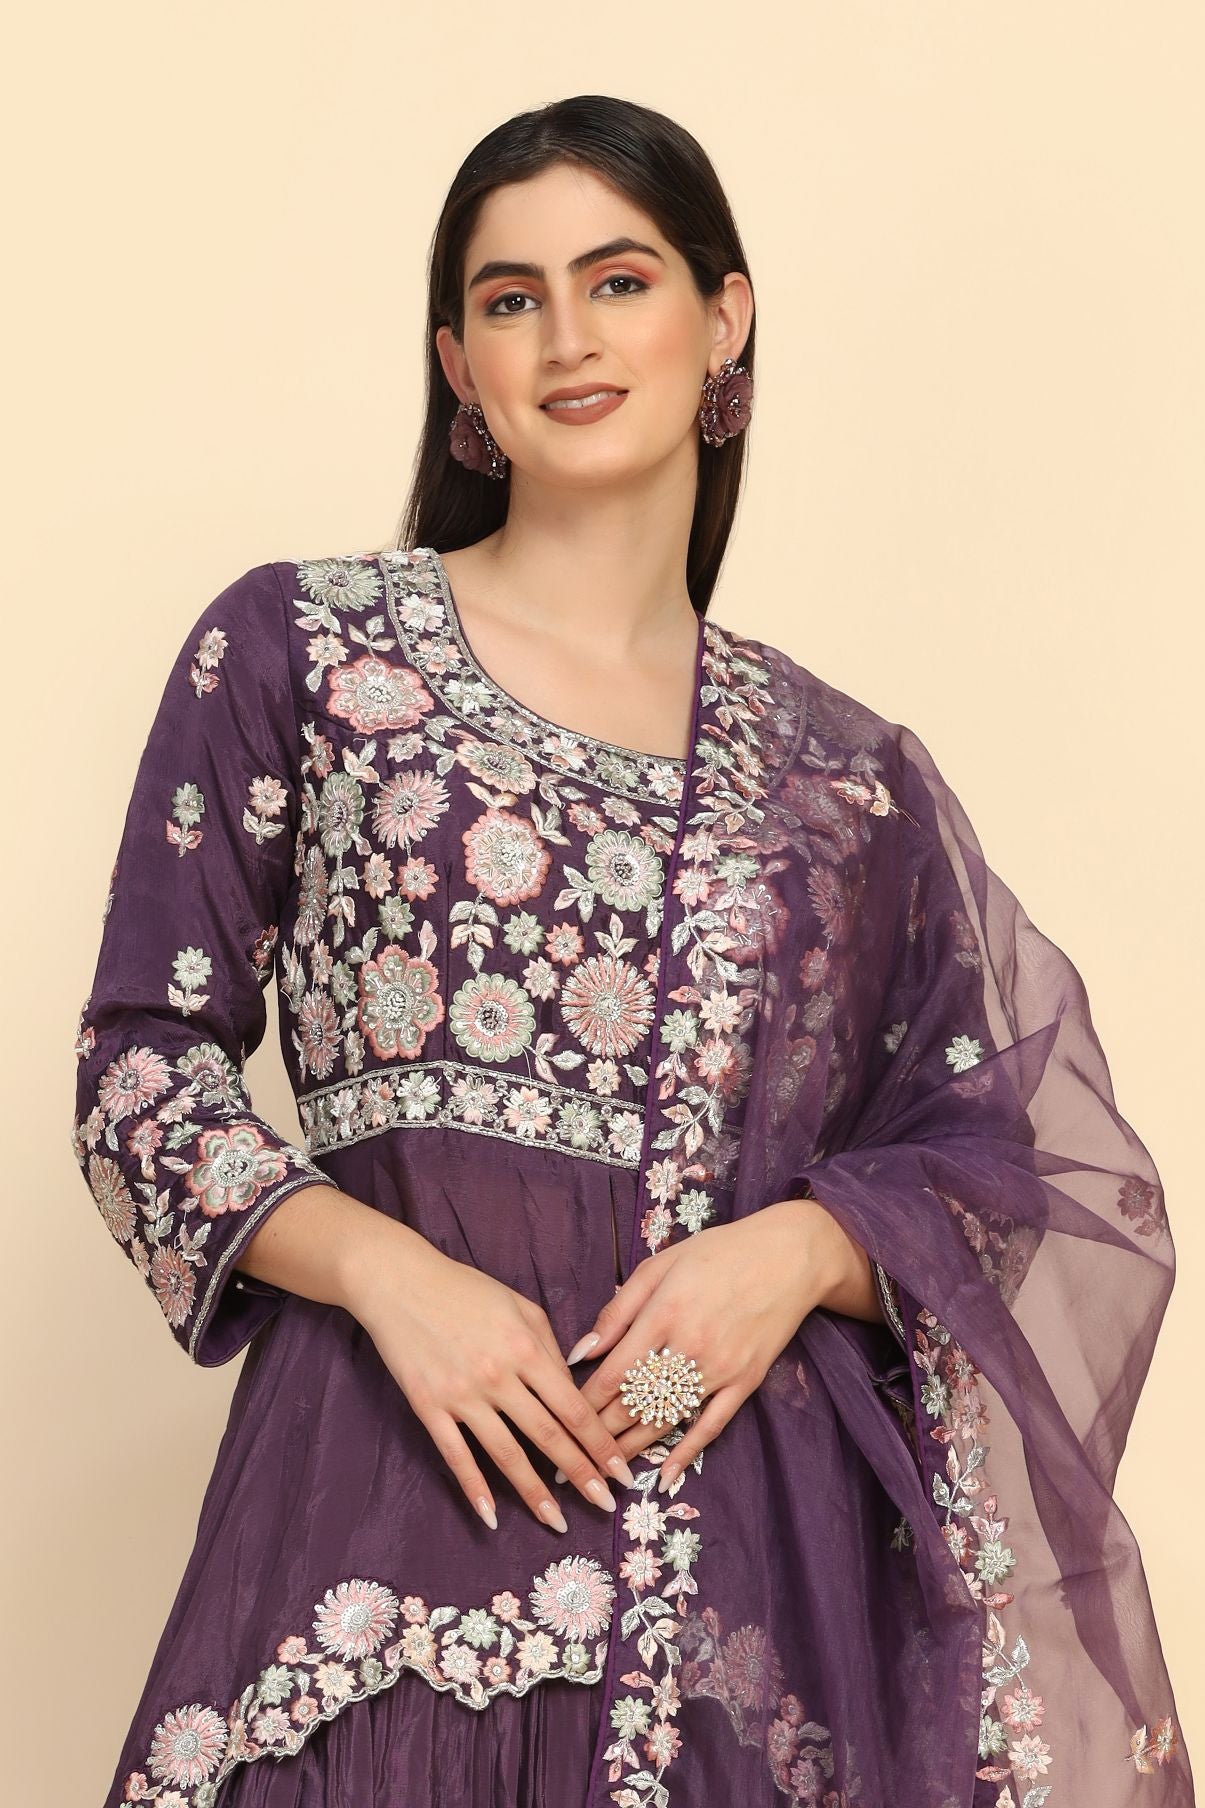 elegant purple color floral motif embroidered lehenga set